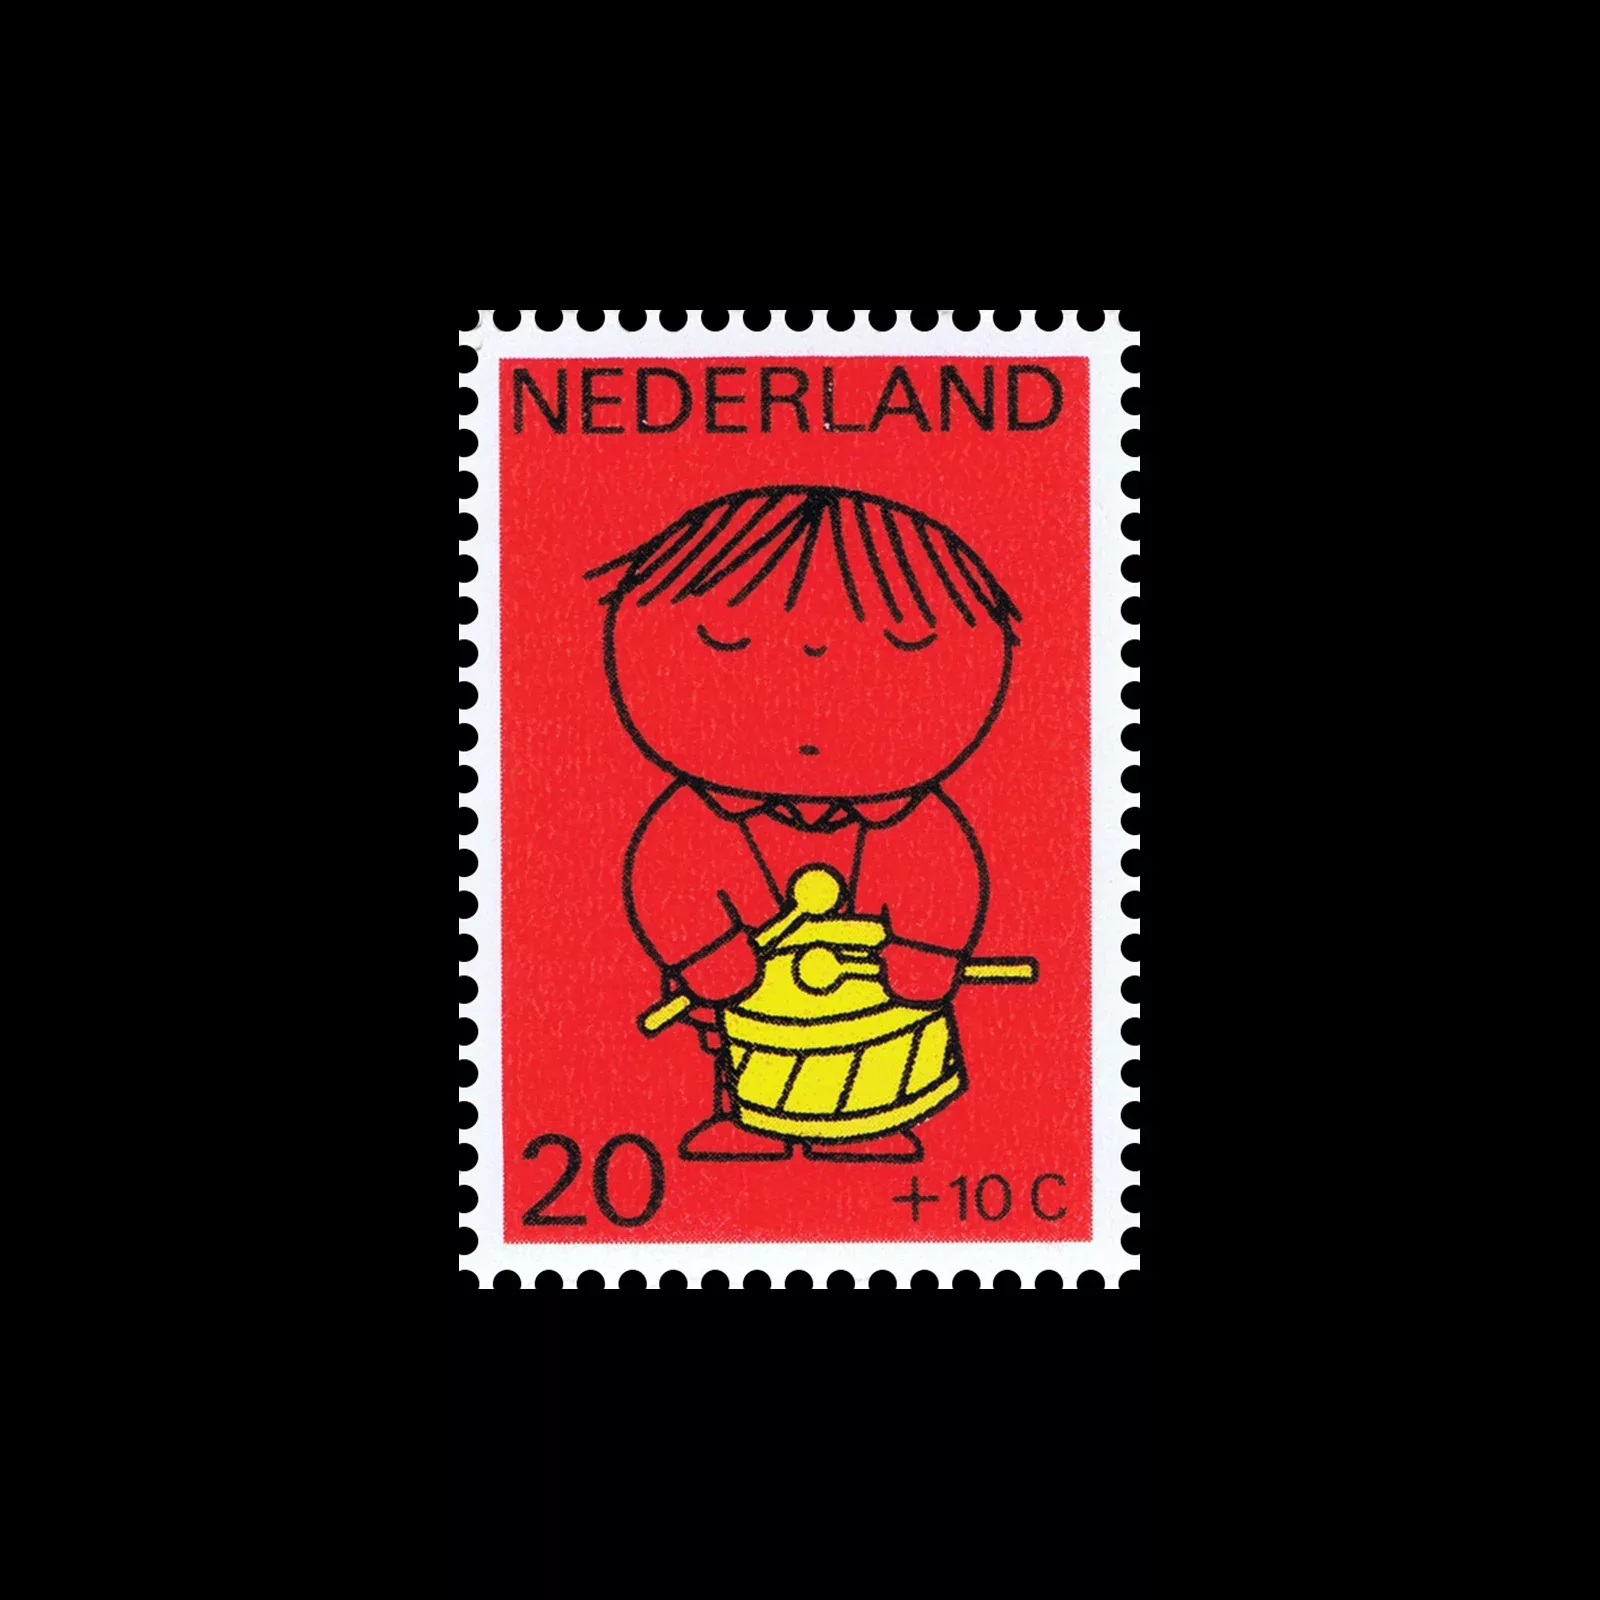 Child Welfare, Netherland Stamps, 1969. Designed by Dick Bruna